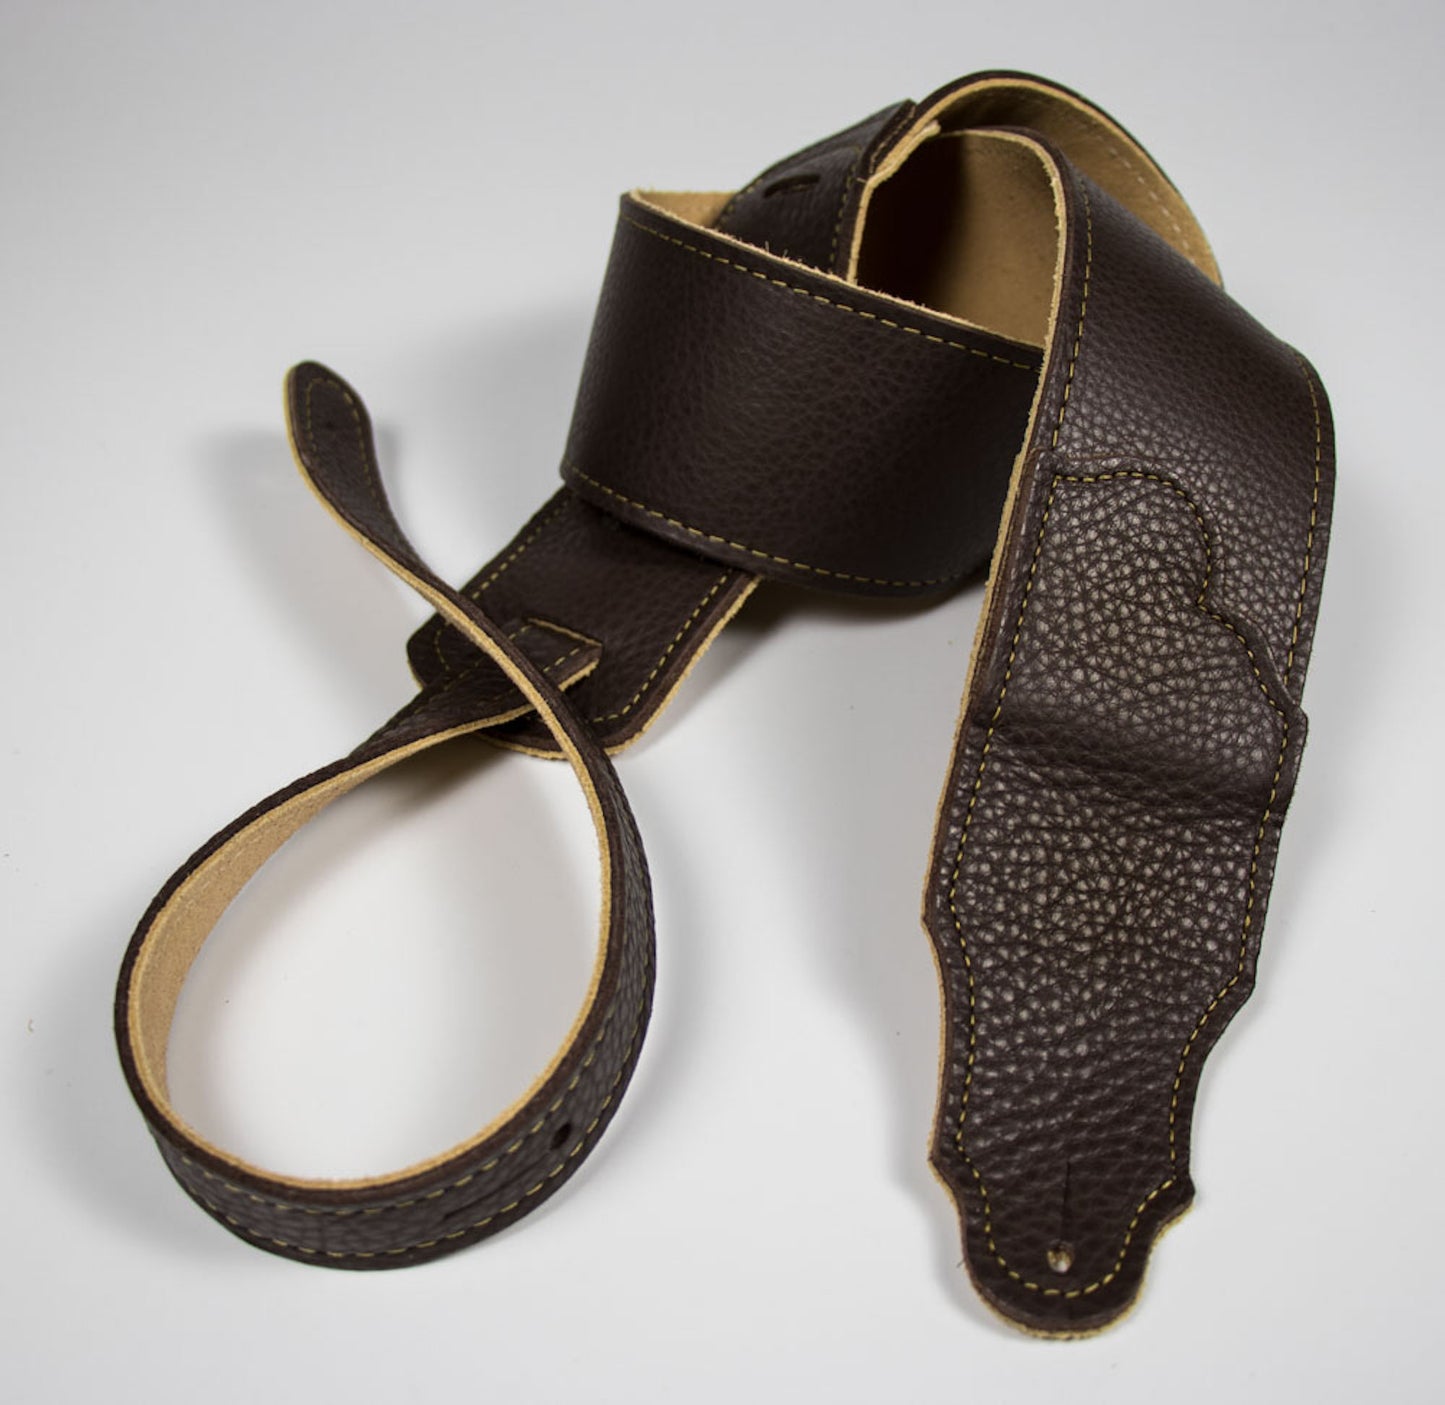 Franklin 2.5" Glove Leather/Contrast Stitching/Choc/Gold Stitching